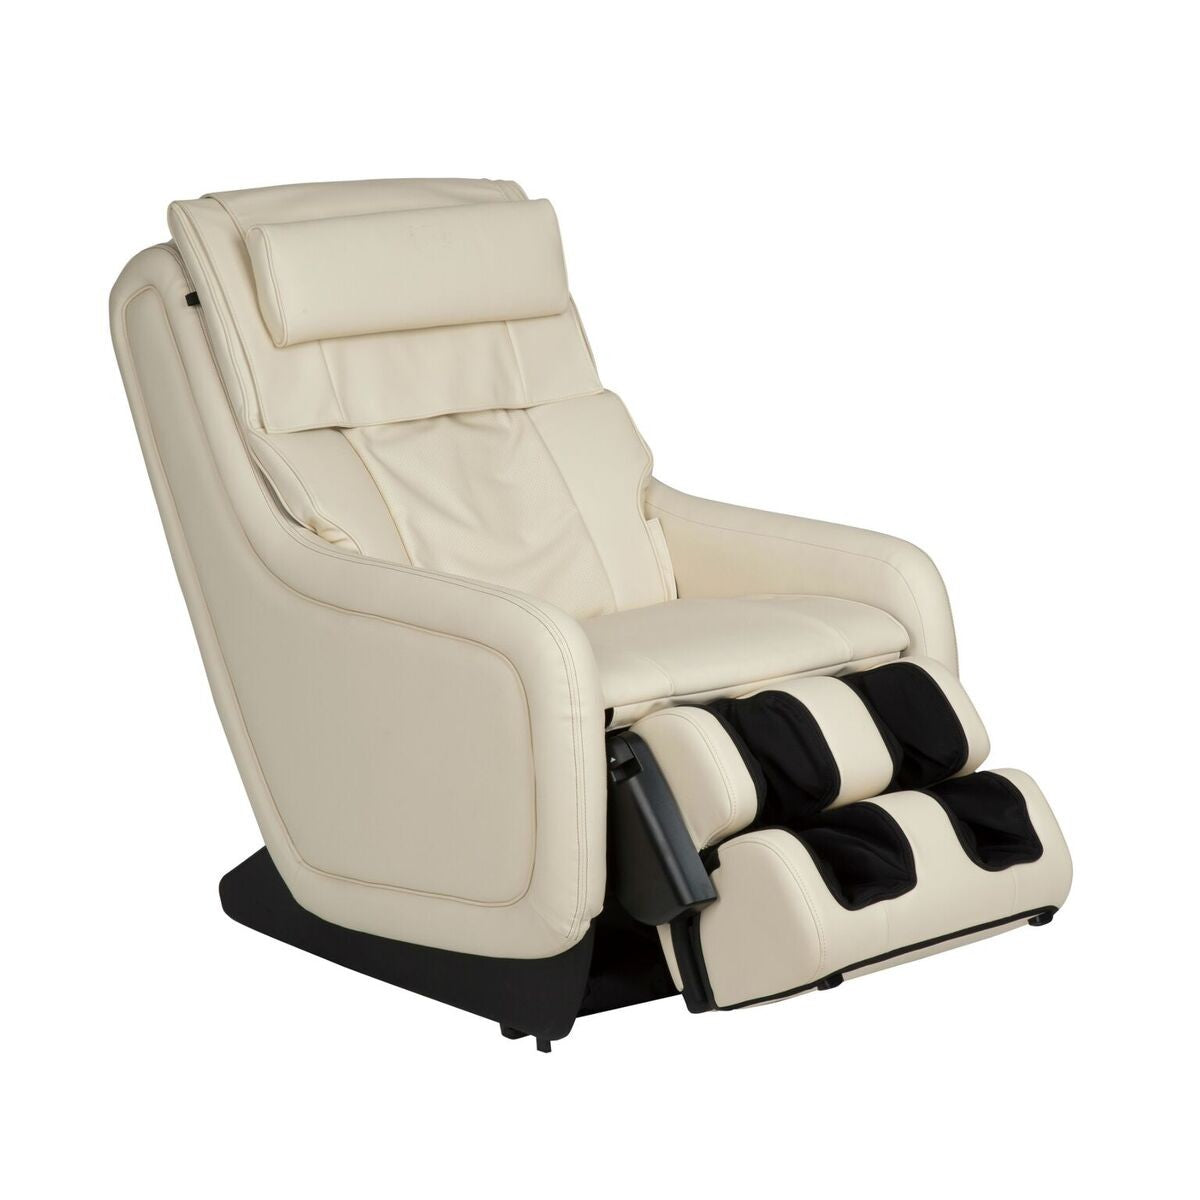 Human Touch ZeroG 5.0 Massage Chair (ZG-5.0)